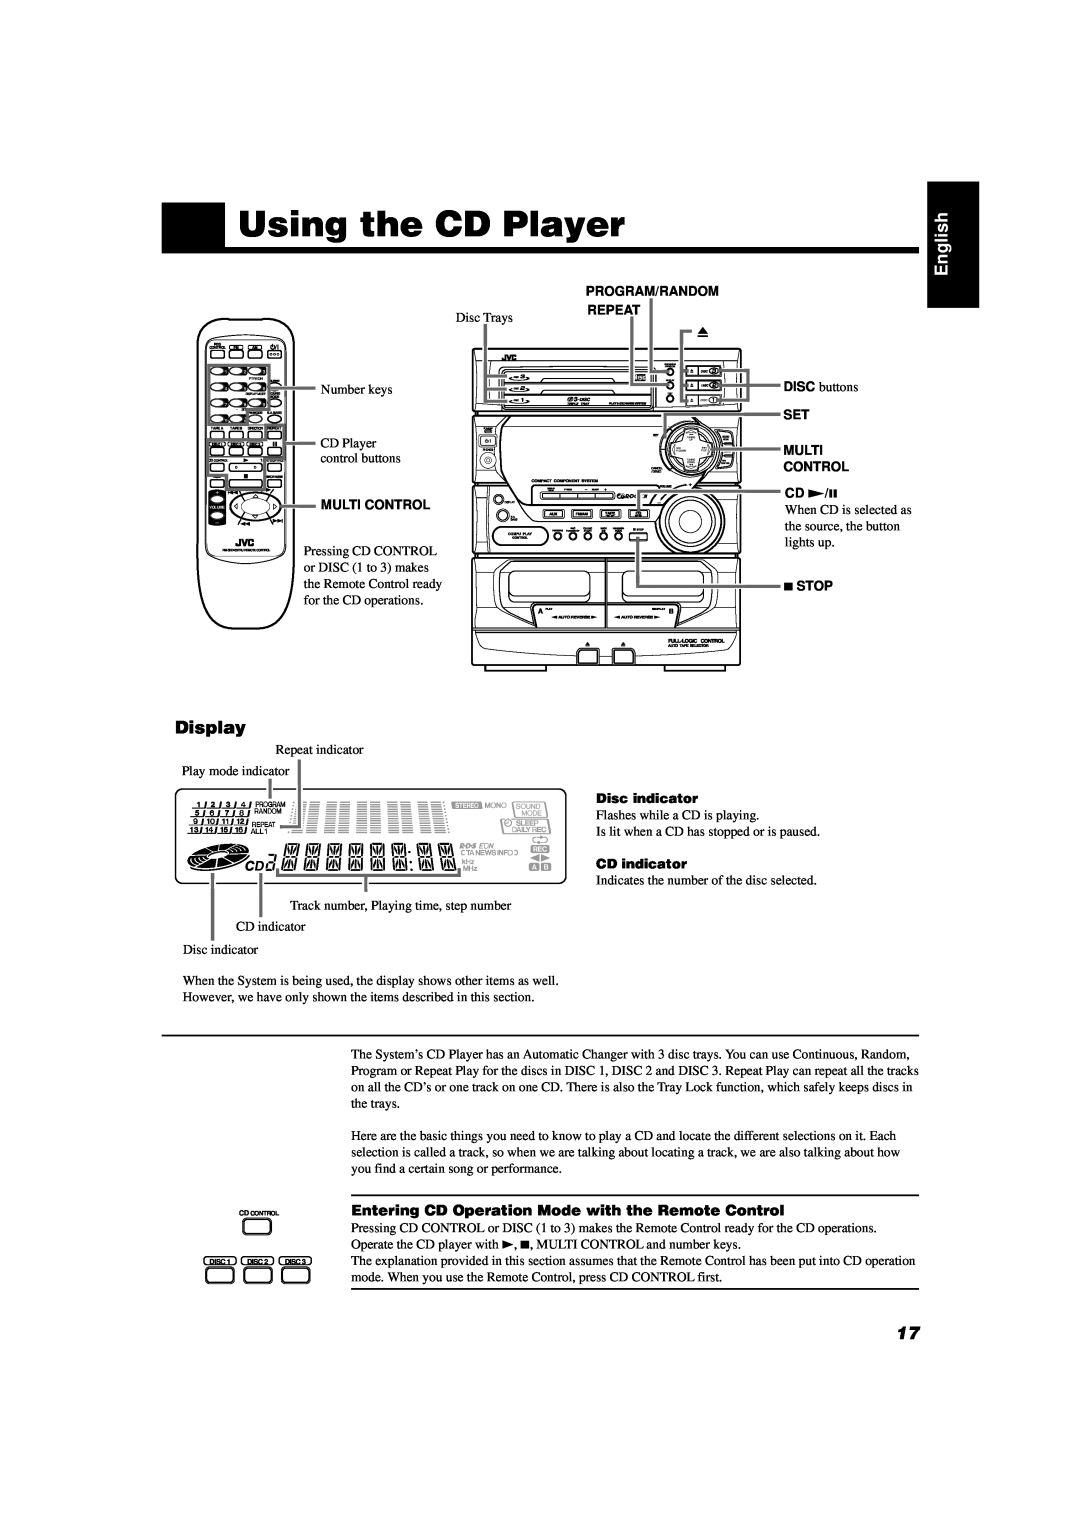 JVC CA-D452TR manual Using the CD Player, English, Display, Program/Random, Repeat, Multi Control, SET MULTI CONTROL CD £/8 